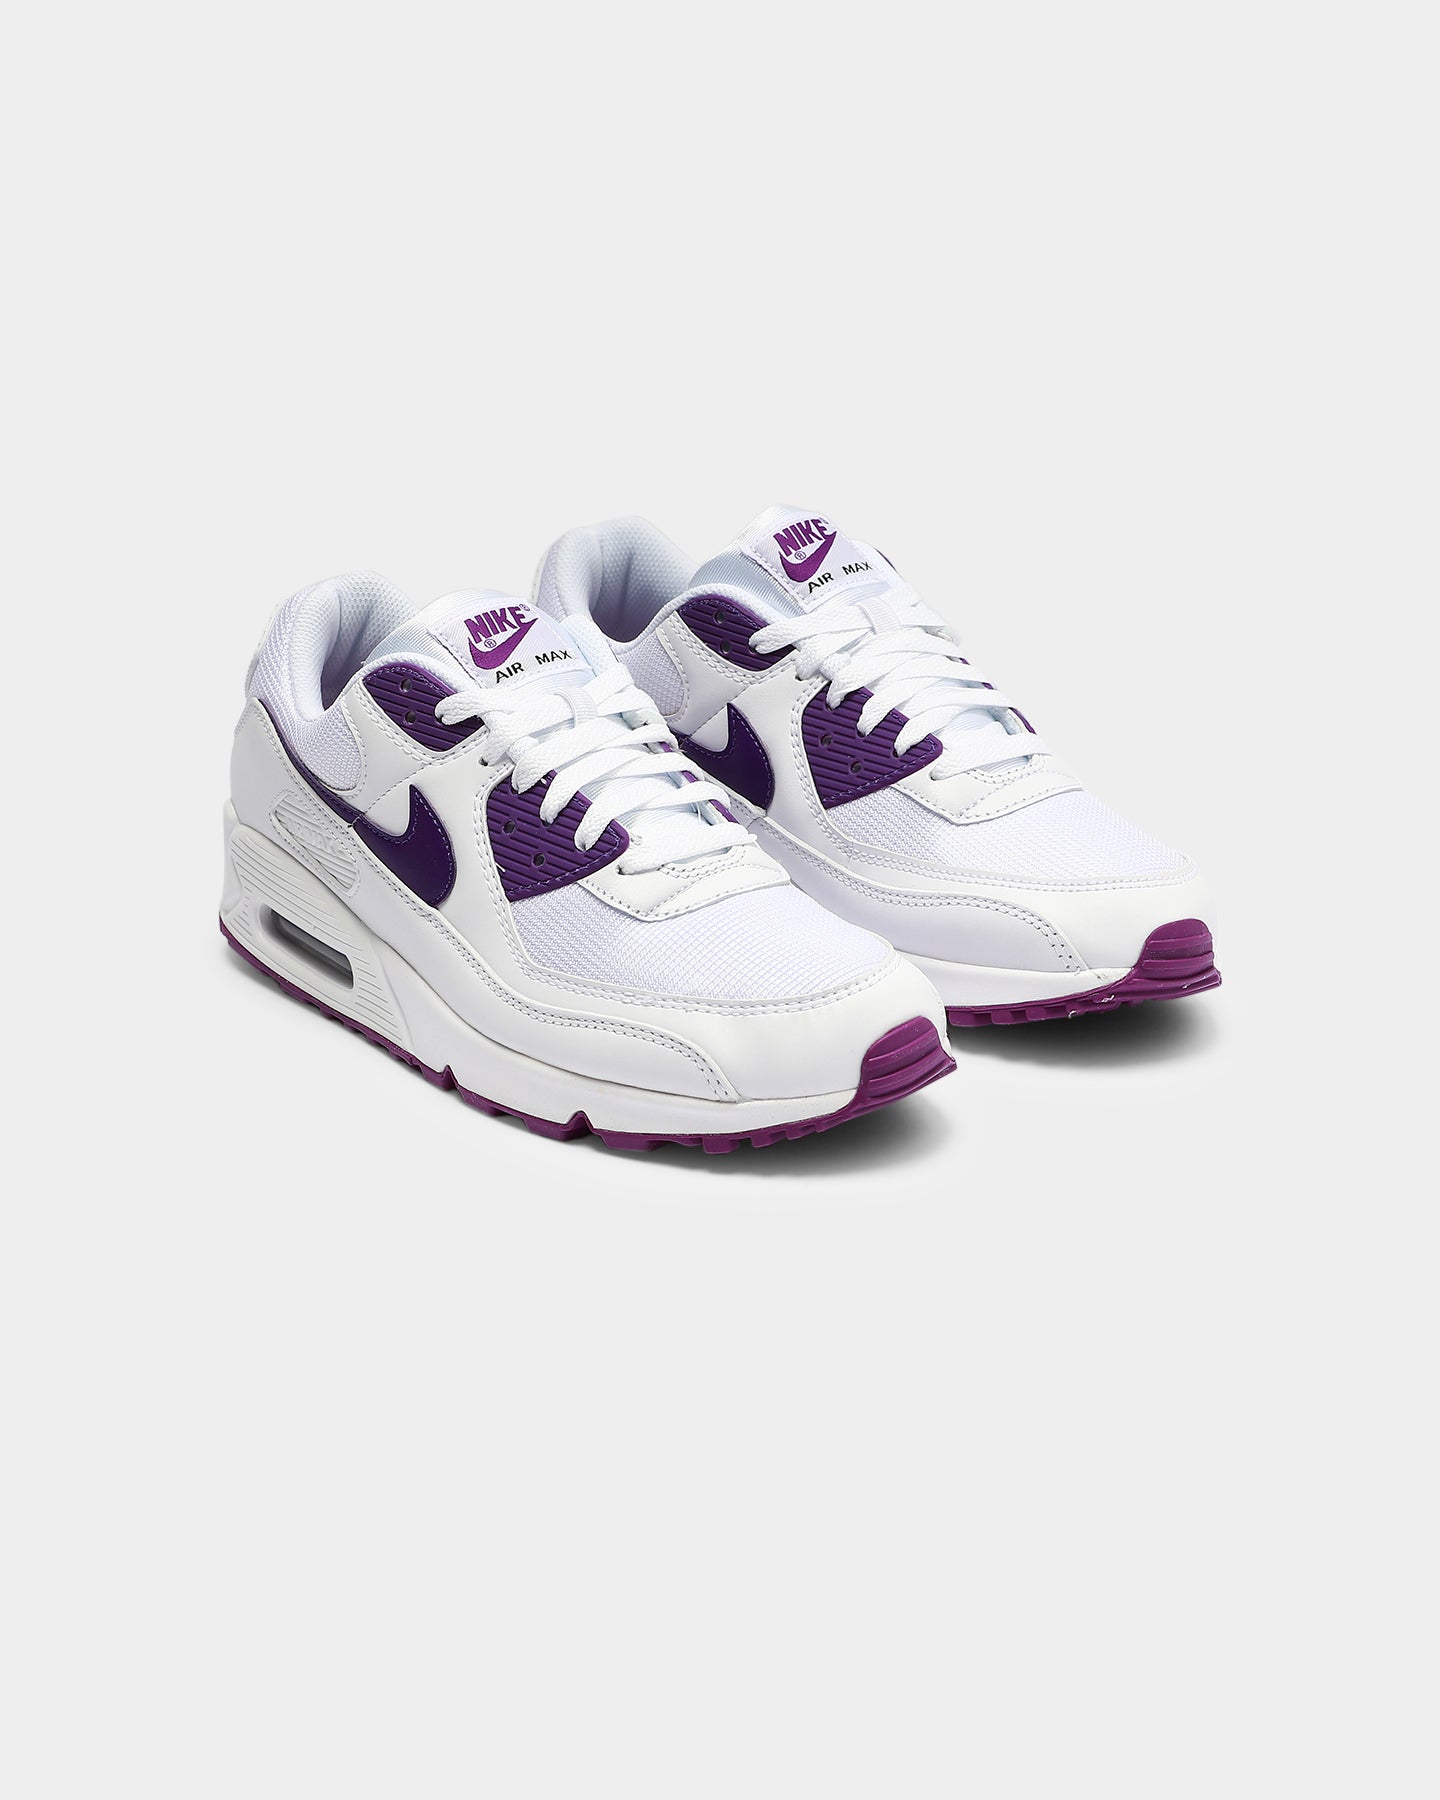 air max 90 purple and white